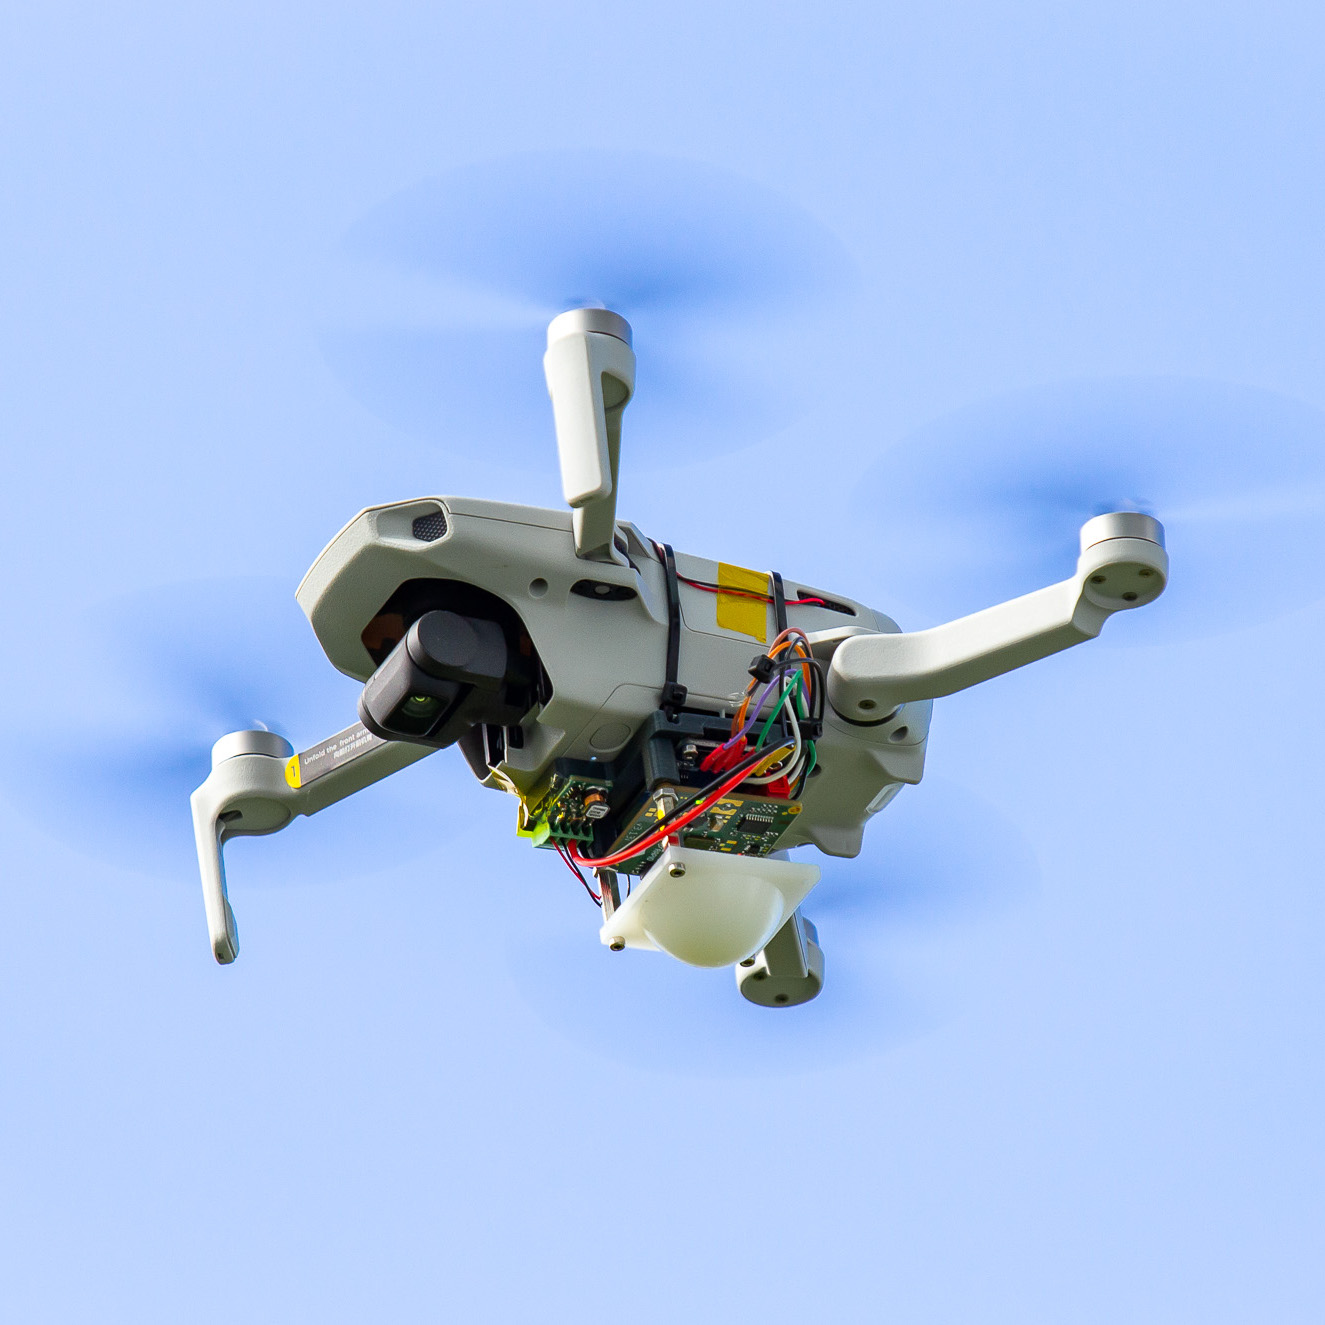 Drone with 60 GHz radar module